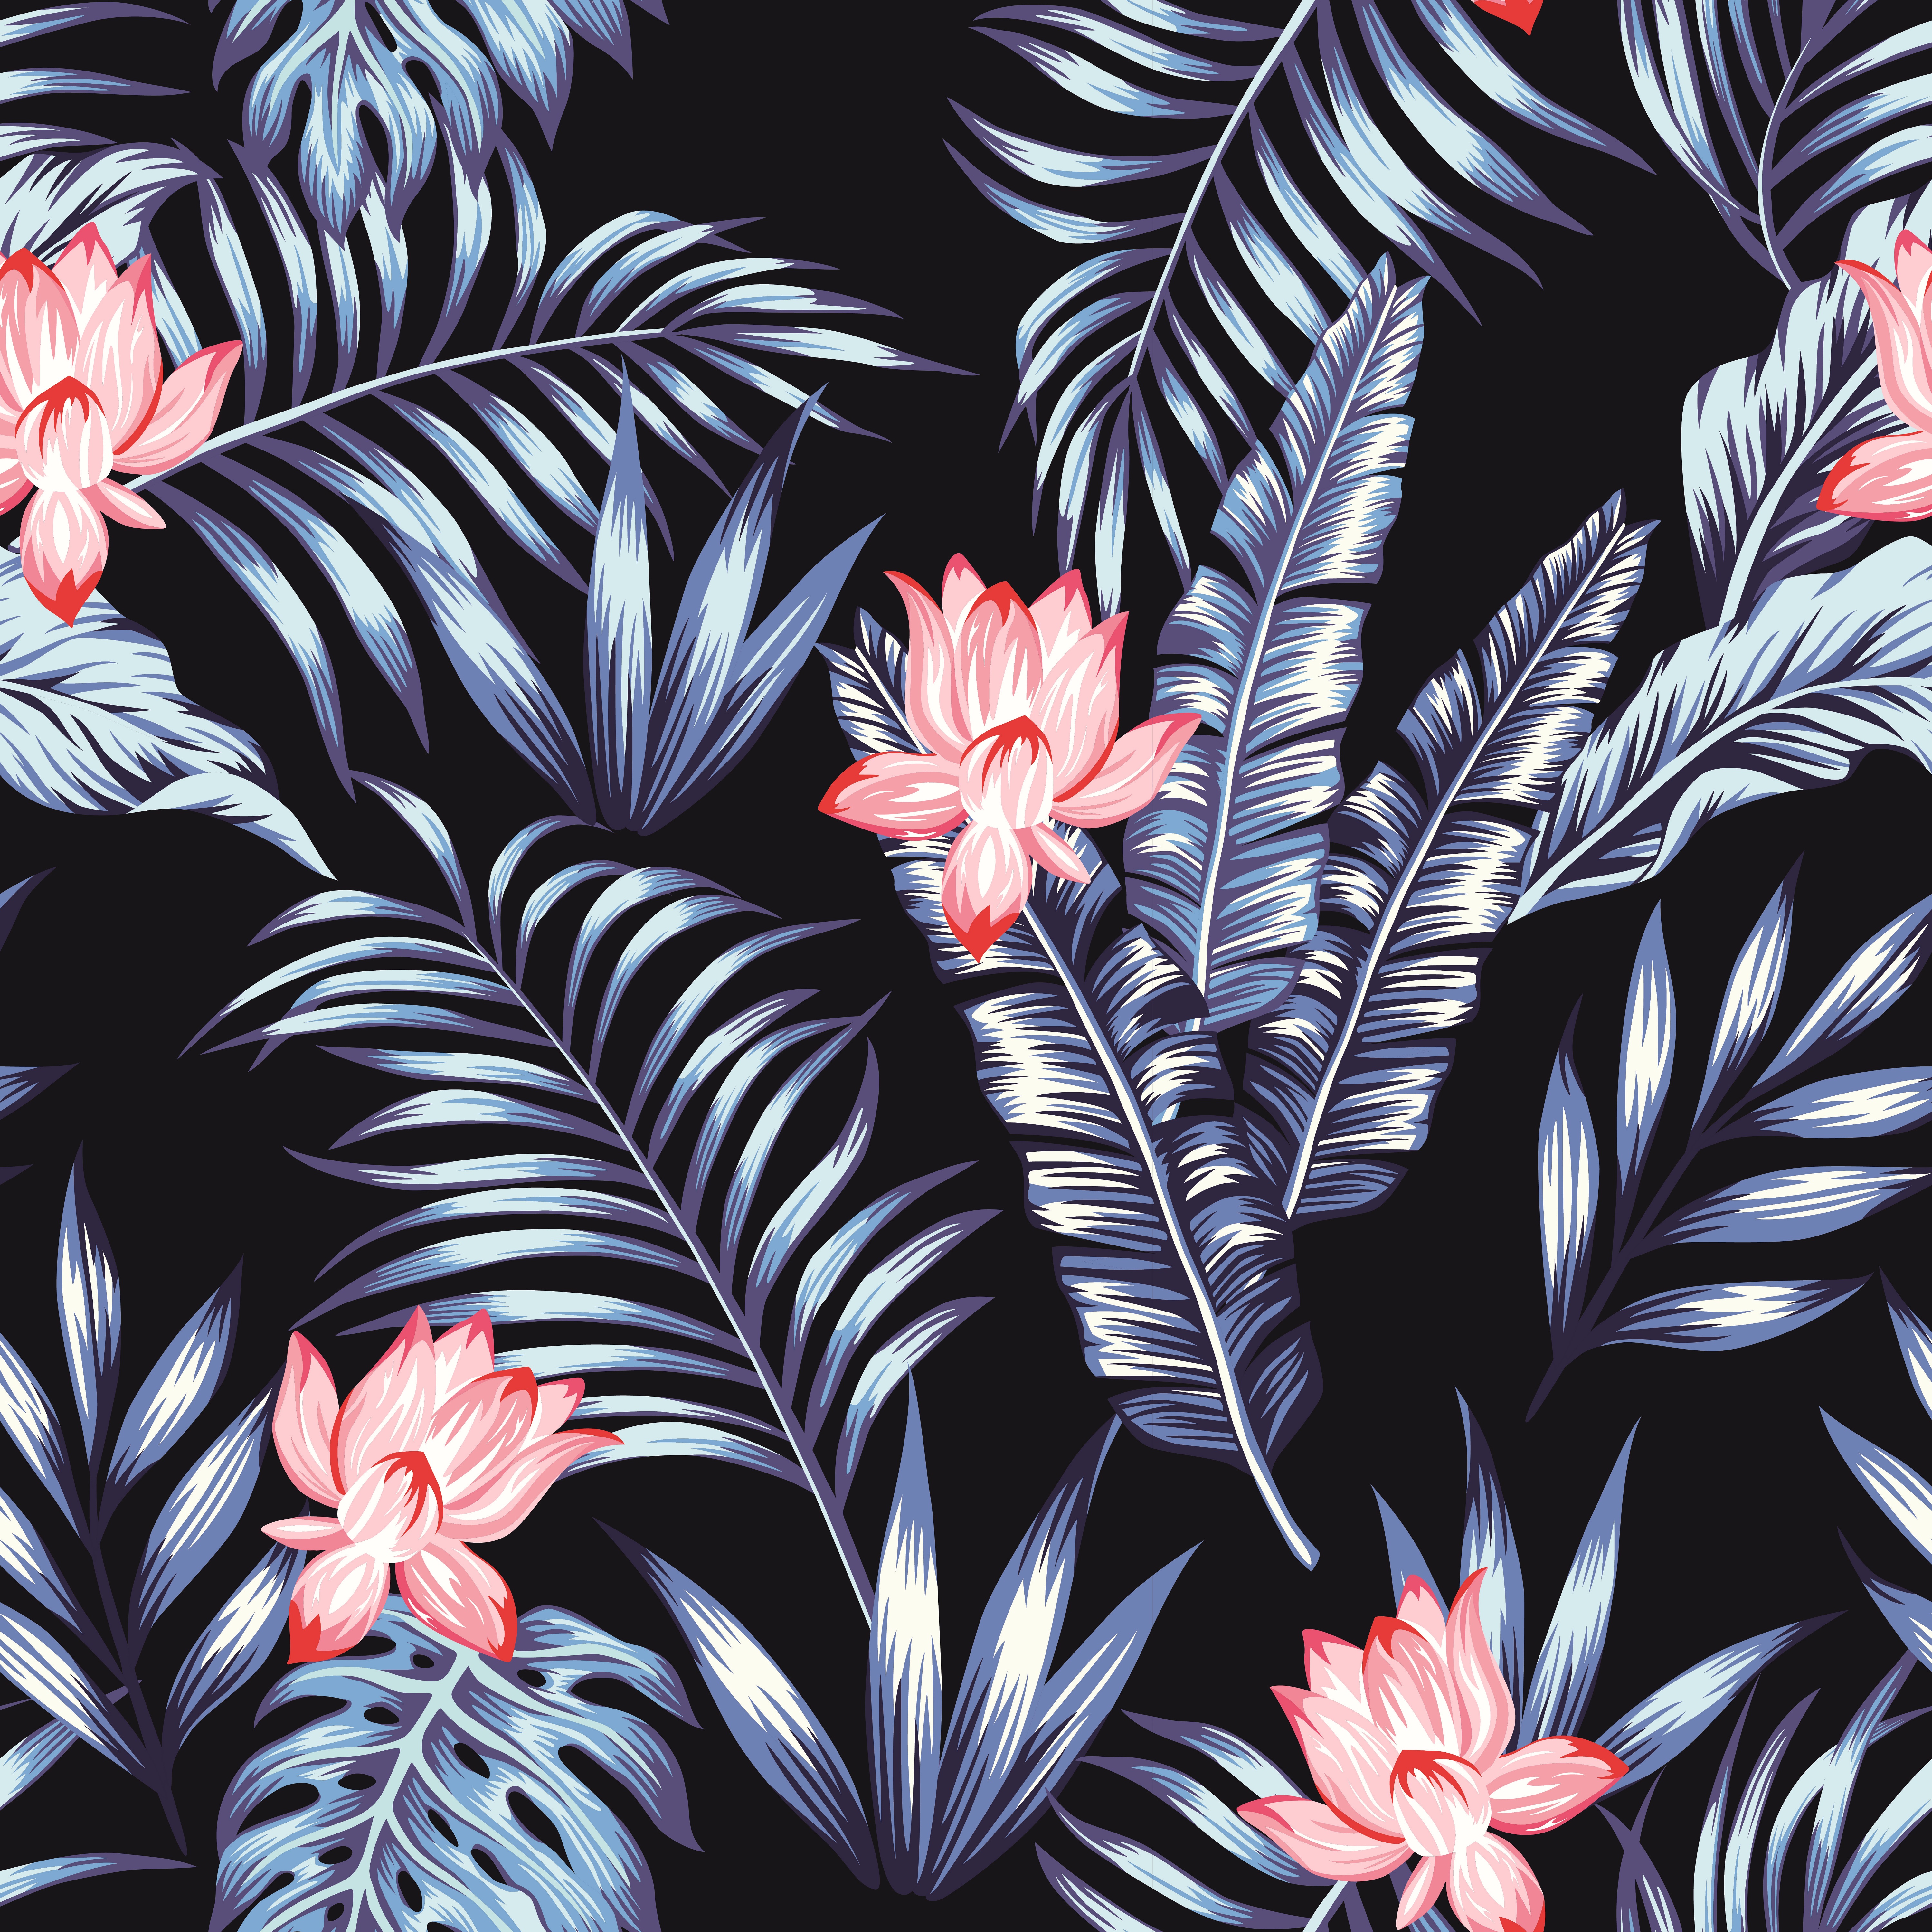 General 6000x6000 flowers vector night jungle leaves pattern digital art floral